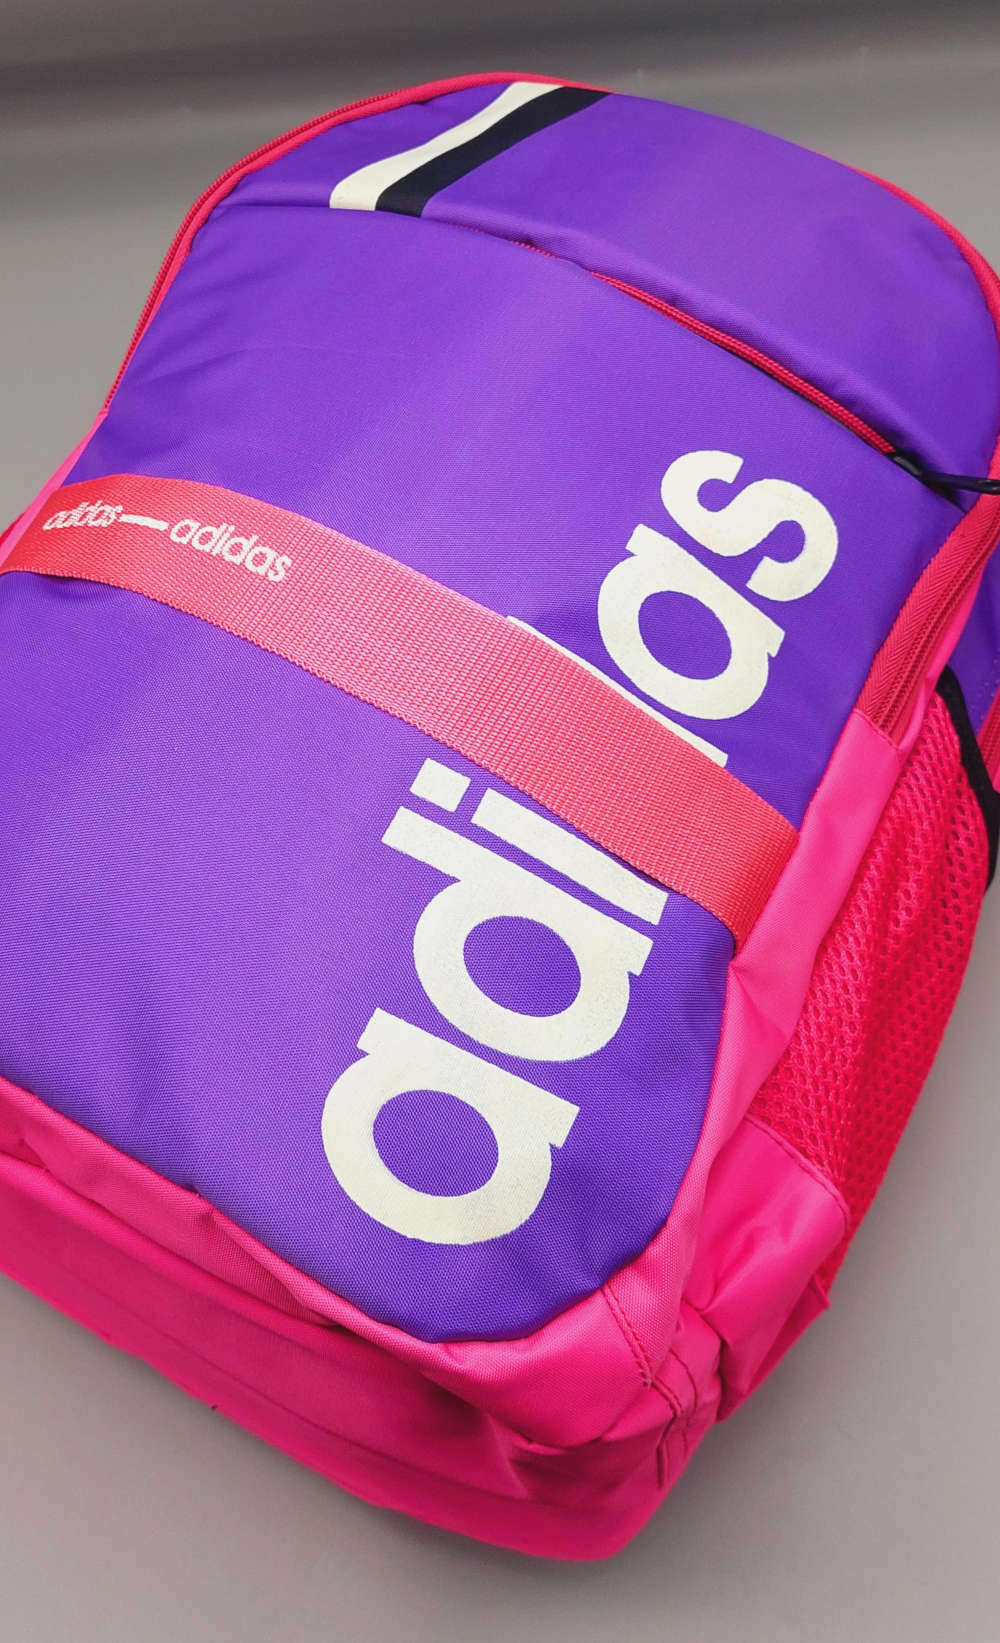 Pink Backpacks | adidas UK